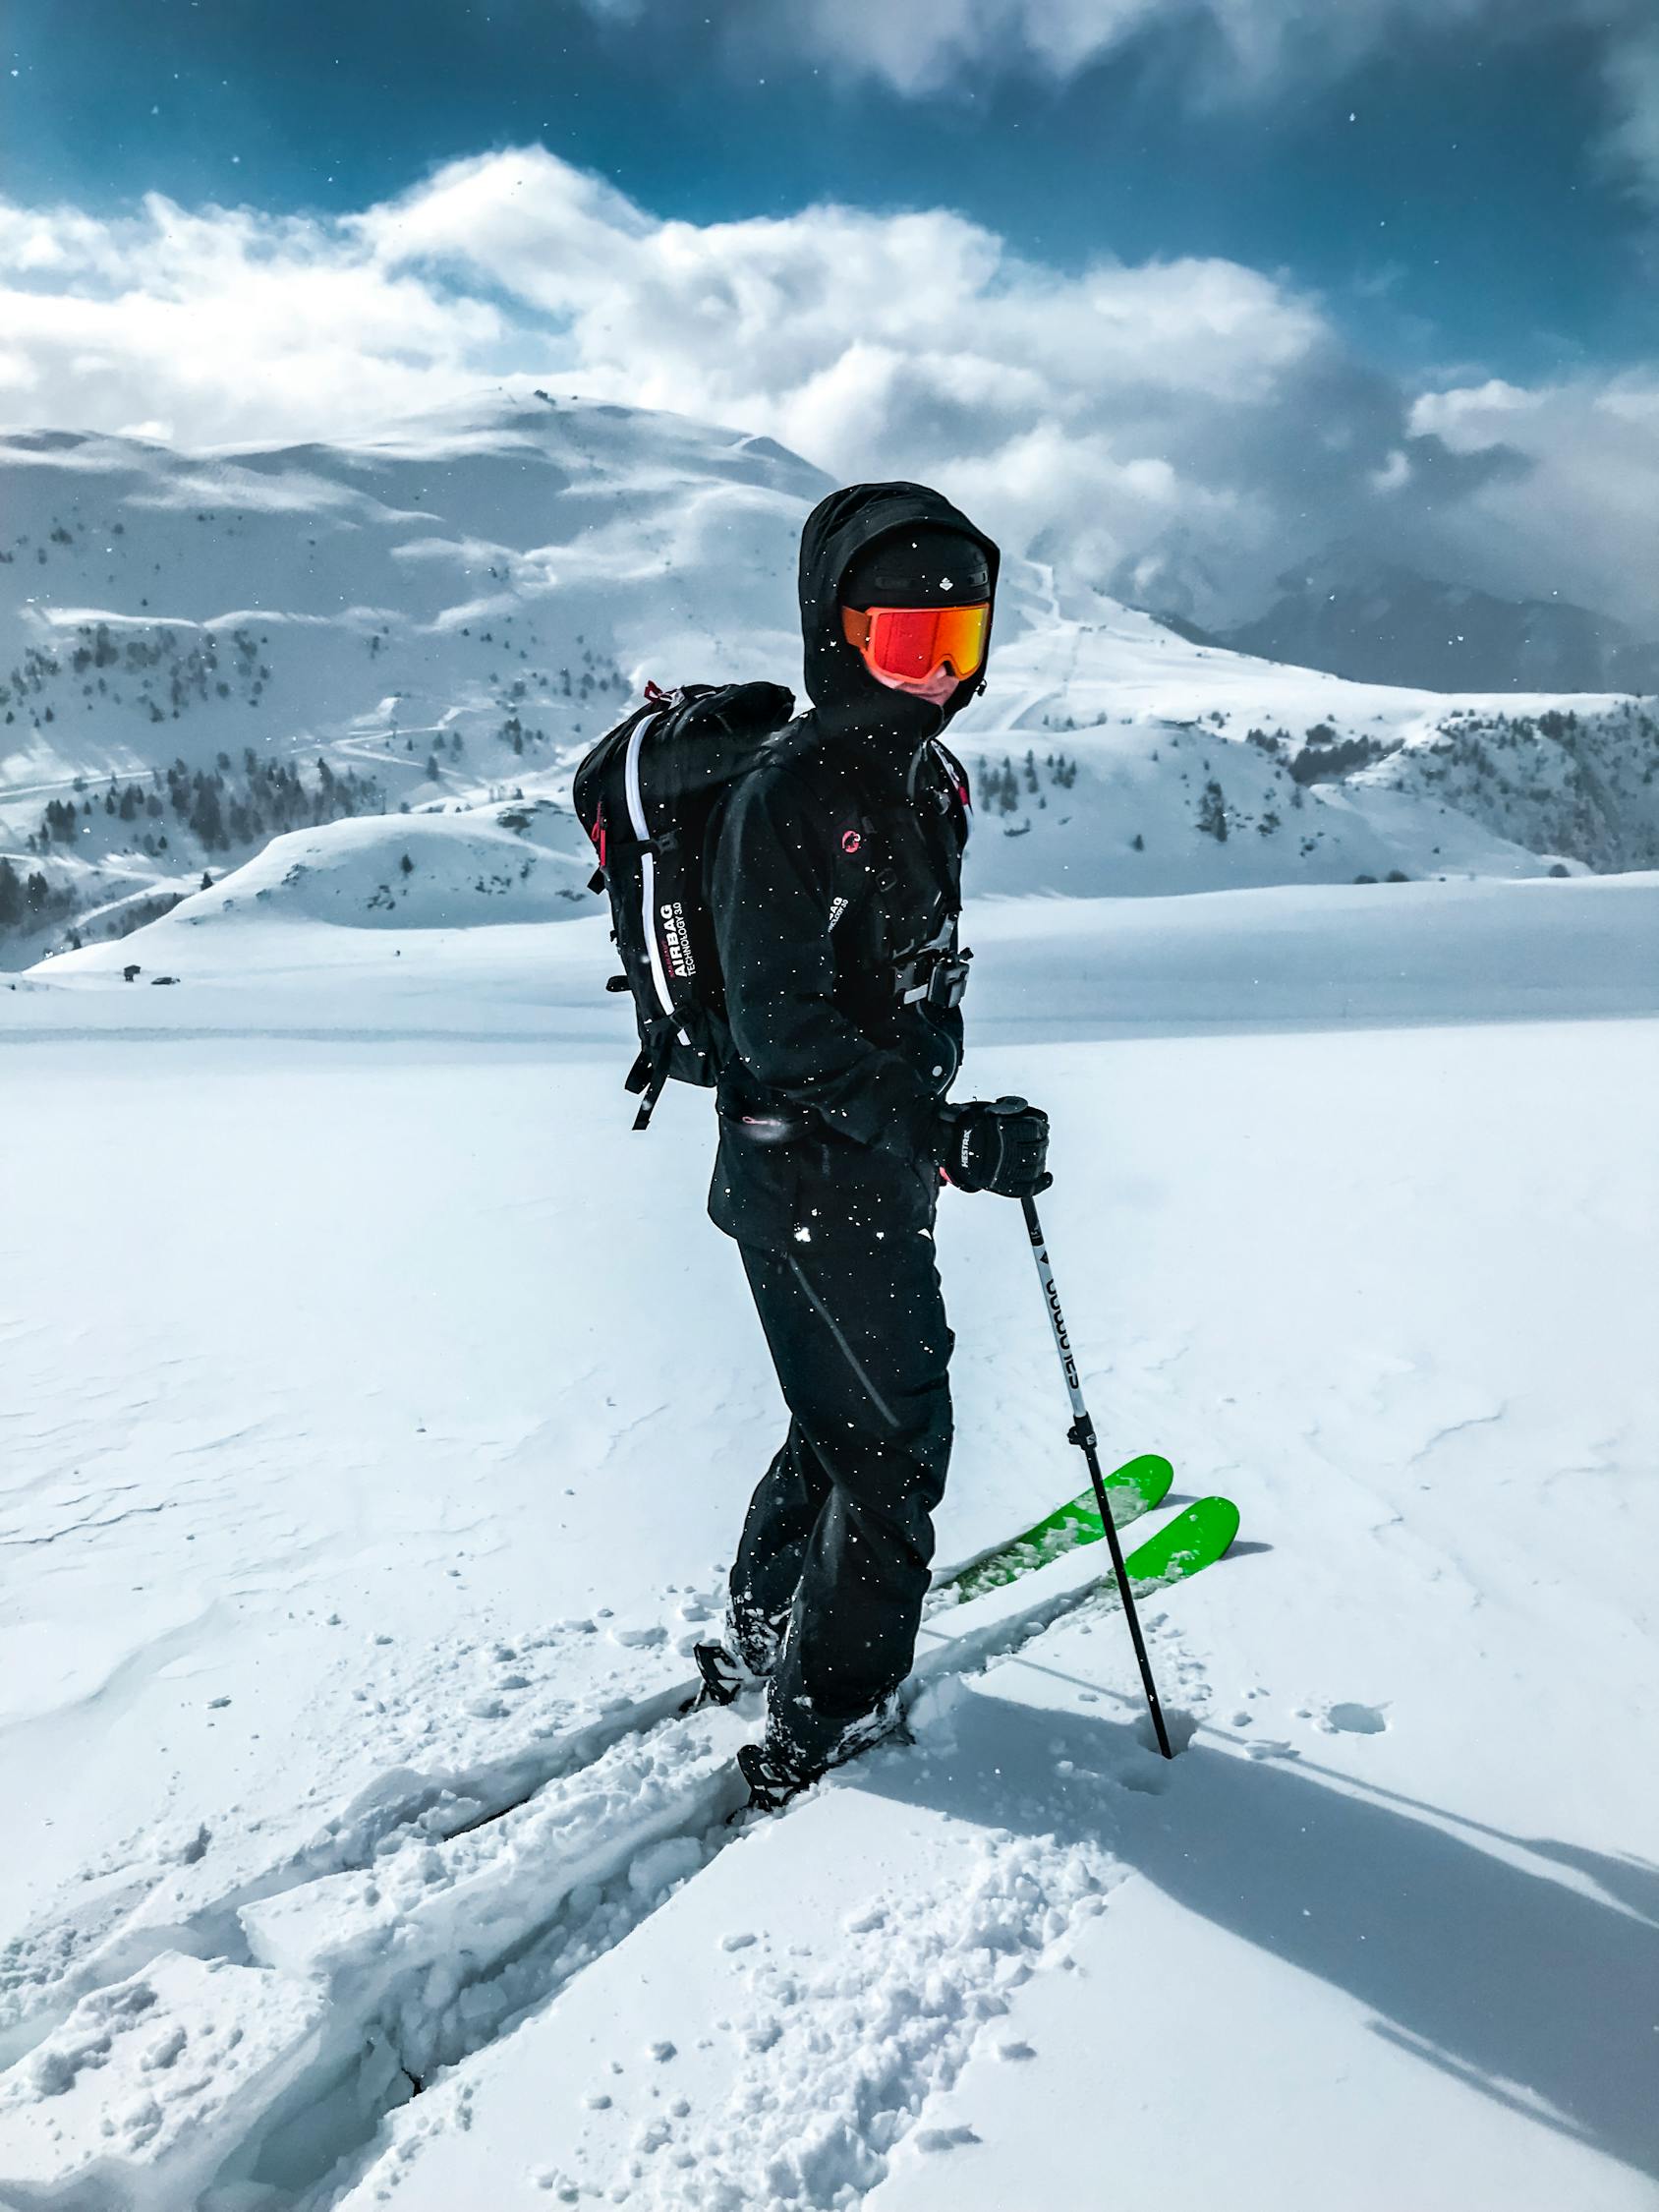 Man riding ski-boards · Free Stock Photo